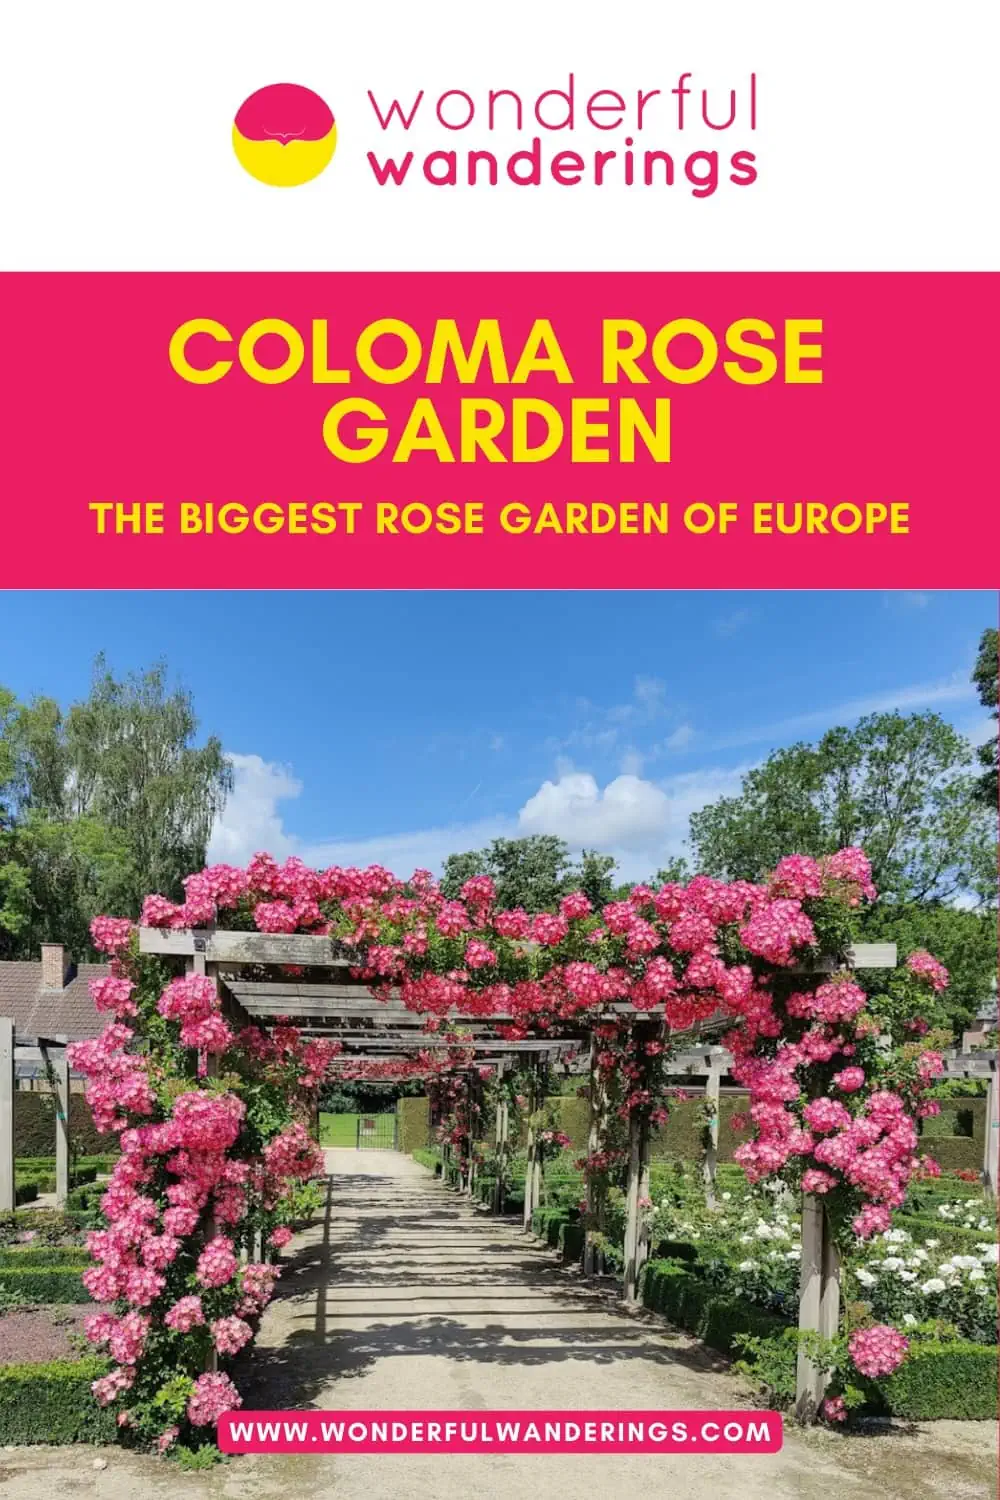 Coloma rose garden pinterest